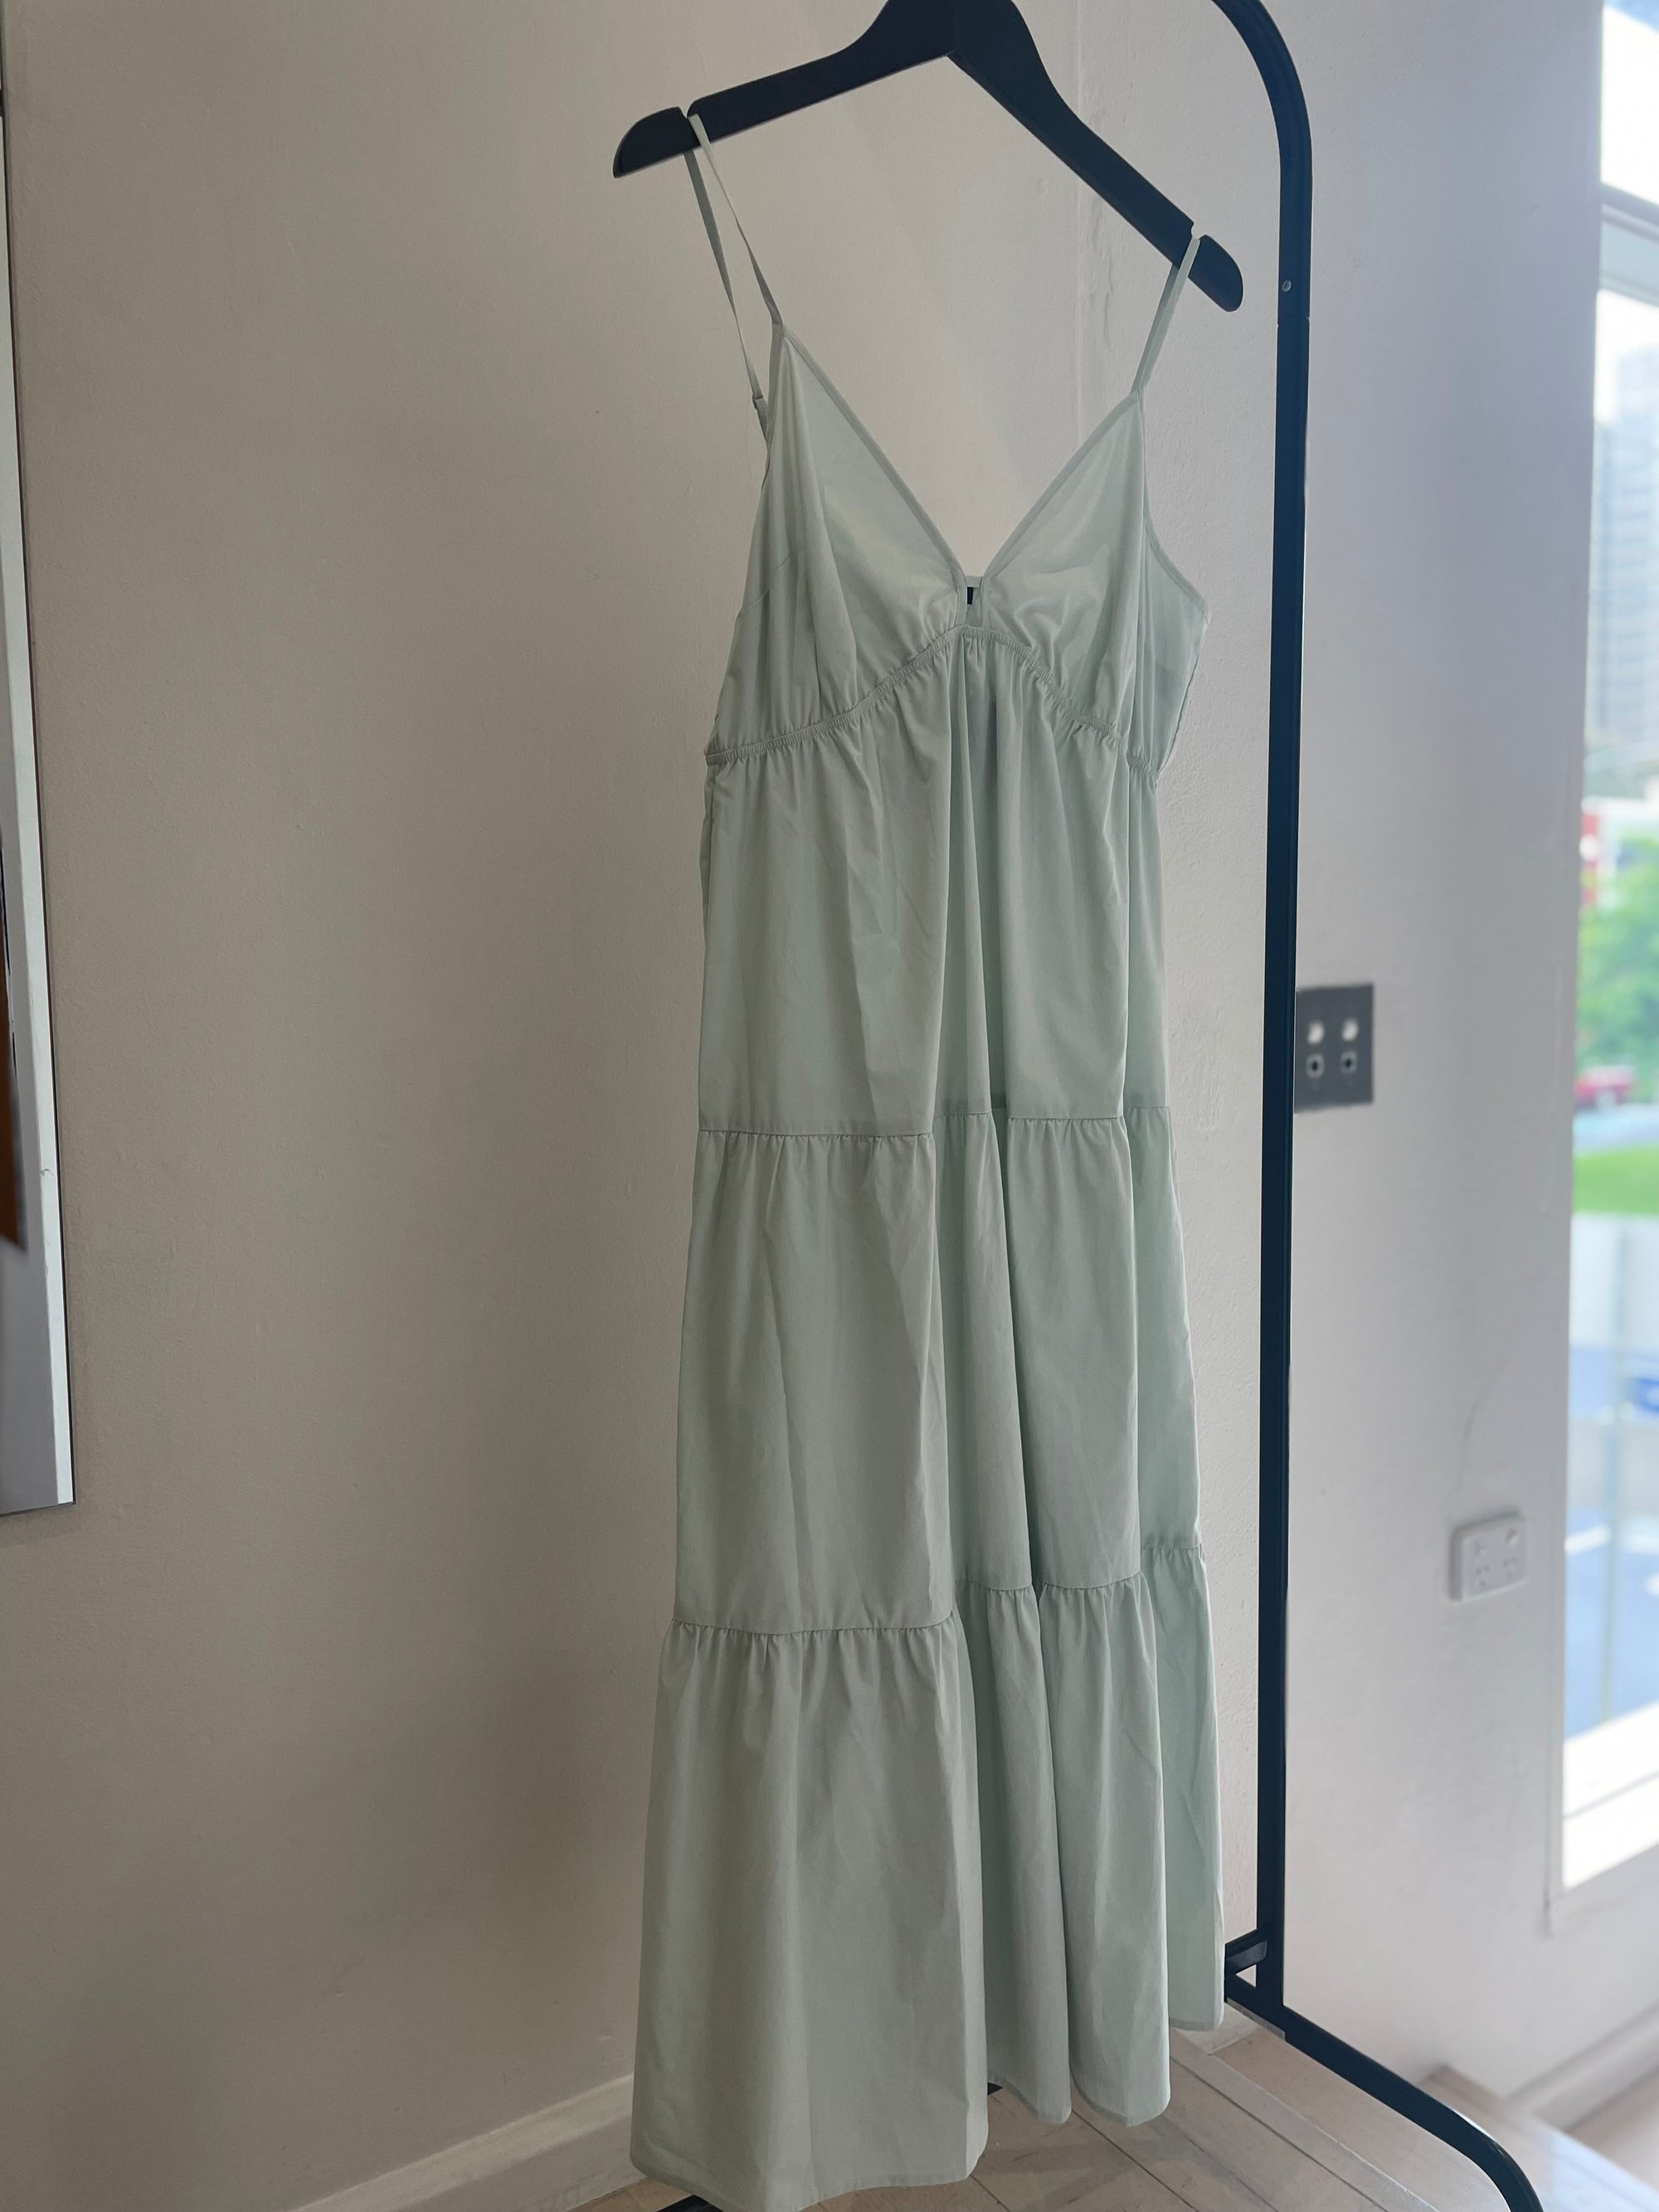 Avril Sea Breeze Dress - size S